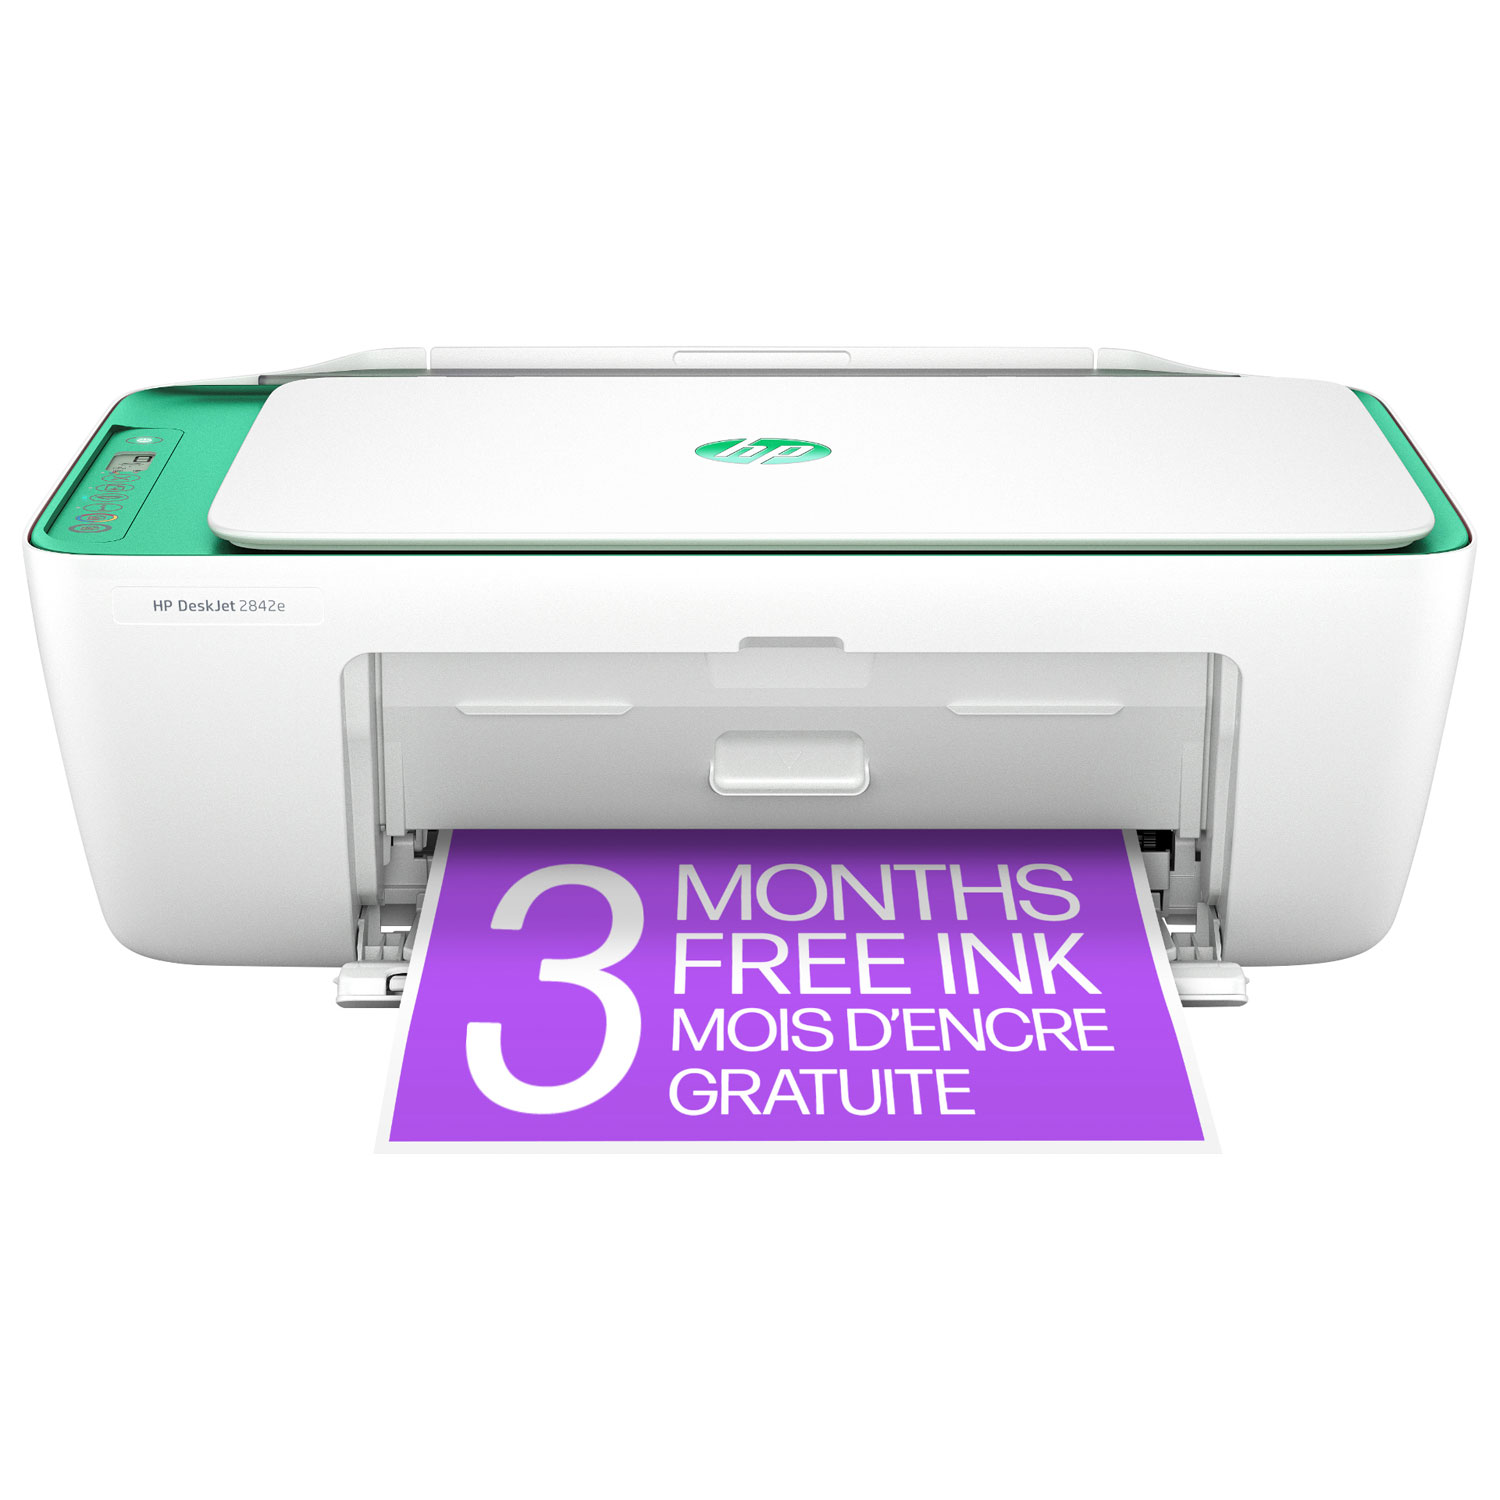 HP 2842E Wireless All-In-One Inkjet Printer - Aurora Green